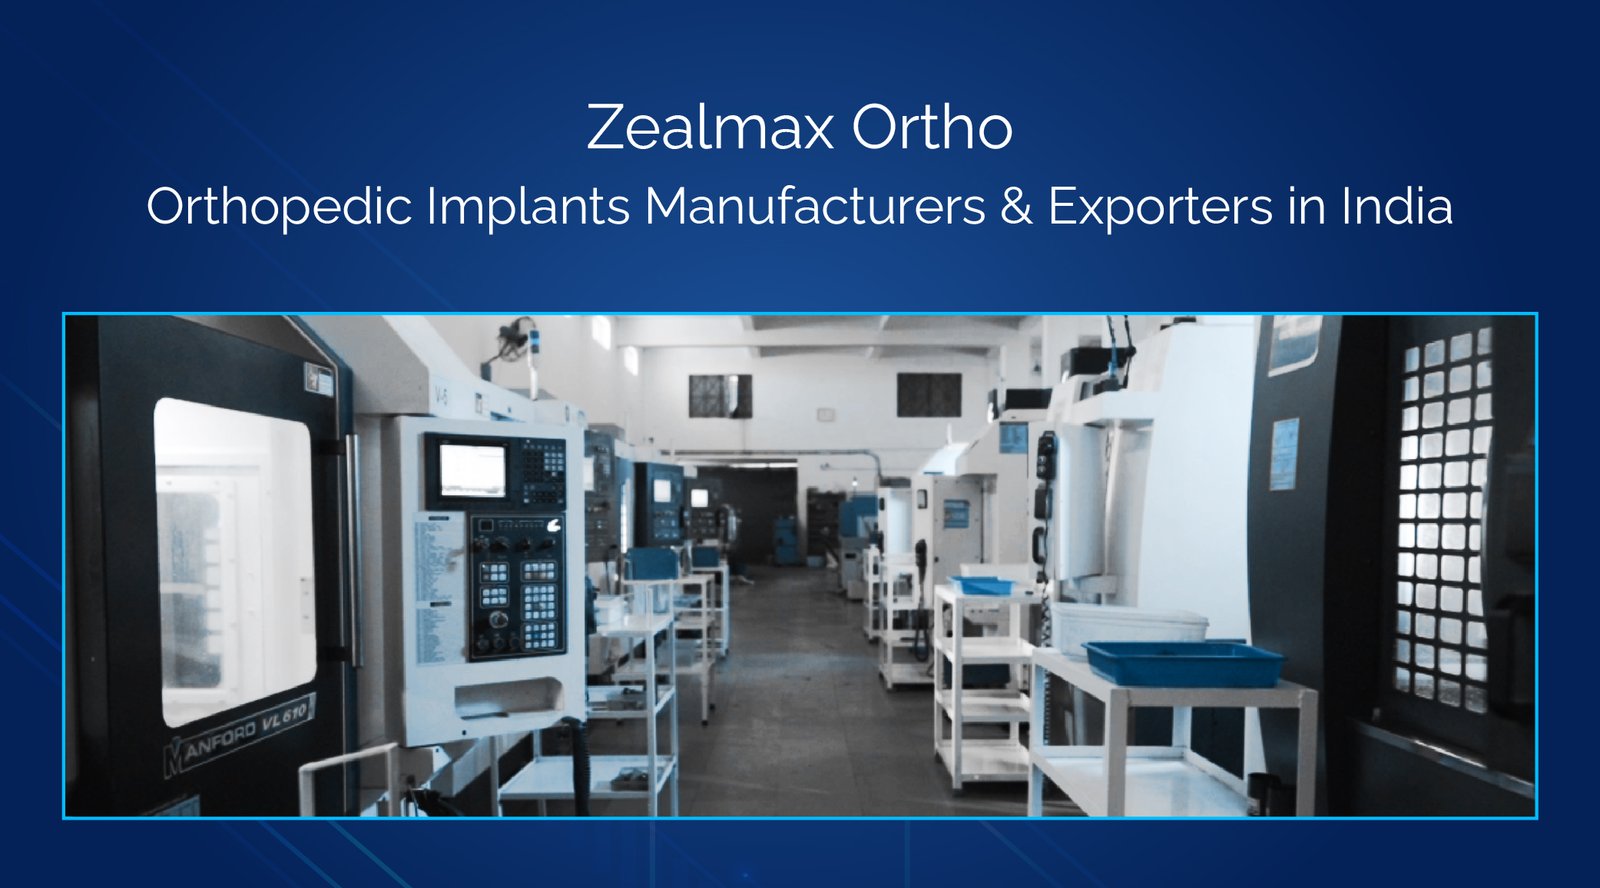 Zealmax Ortho: Orthopedic Implants Manufacturers in India 